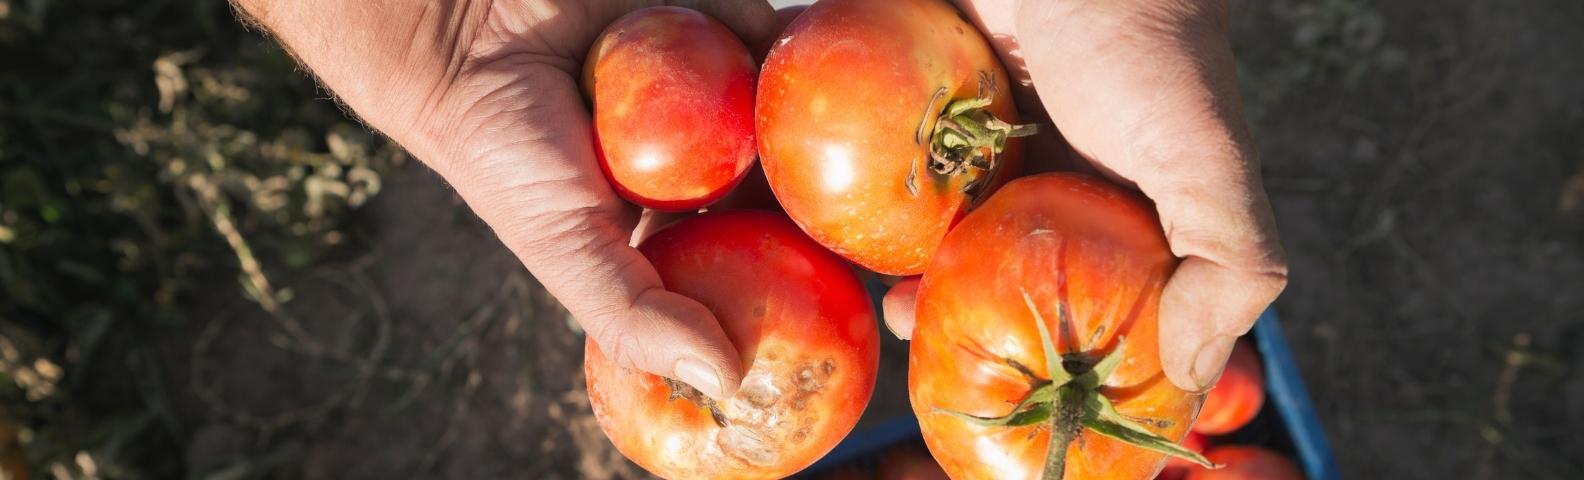 Tomatoes picking